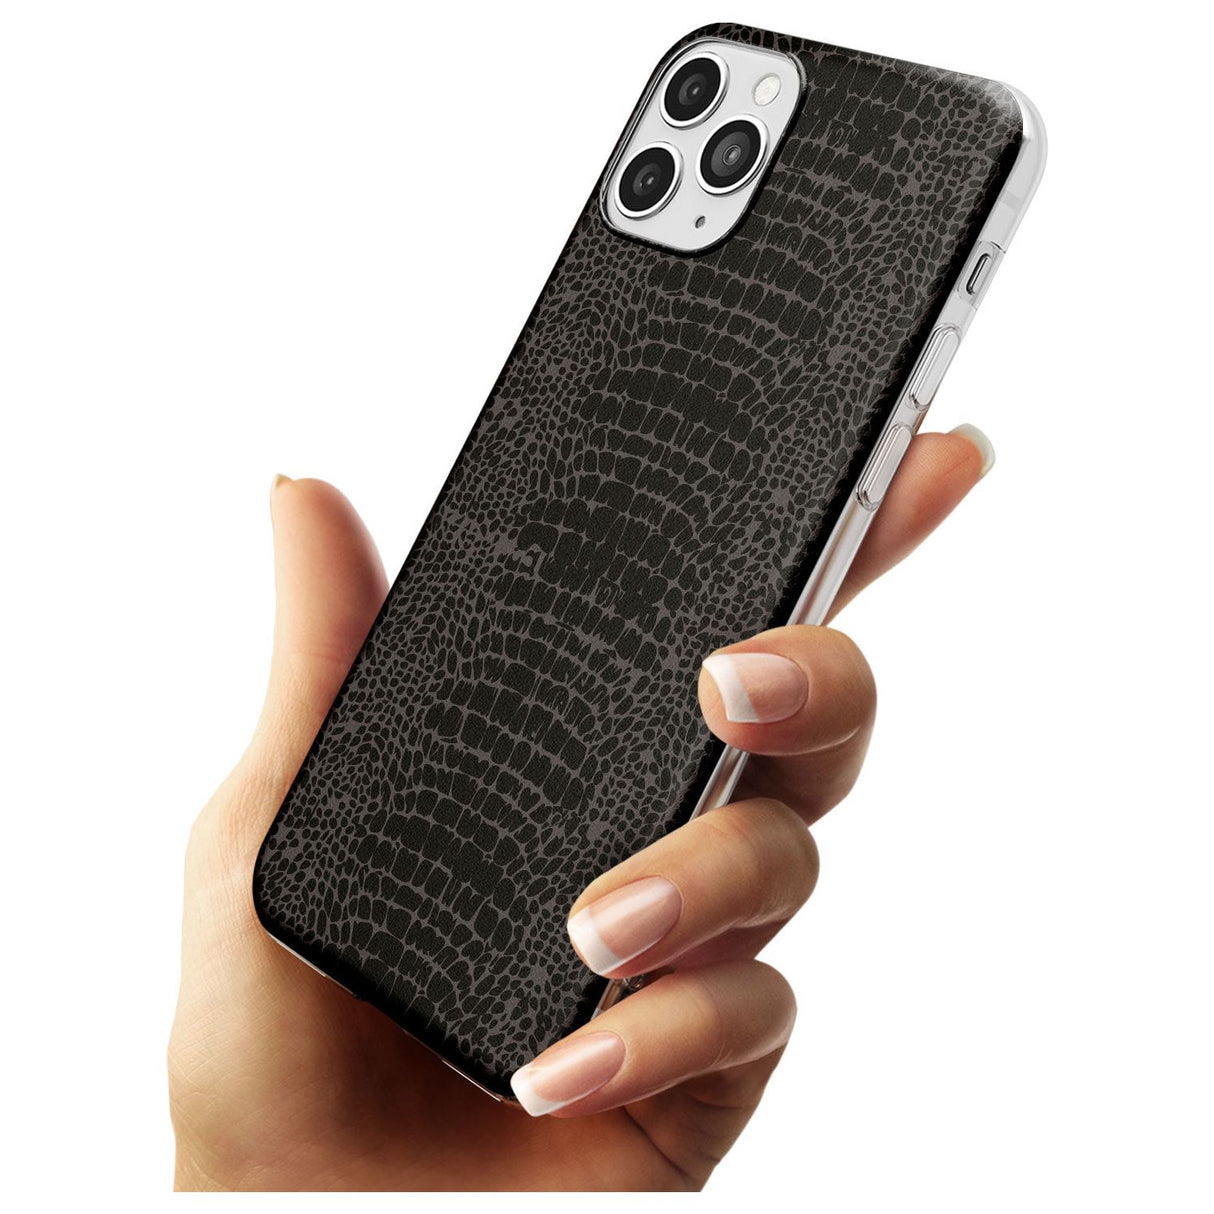 Dark Animal Print Pattern Snake Skin Slim TPU Phone Case for iPhone 11 Pro Max